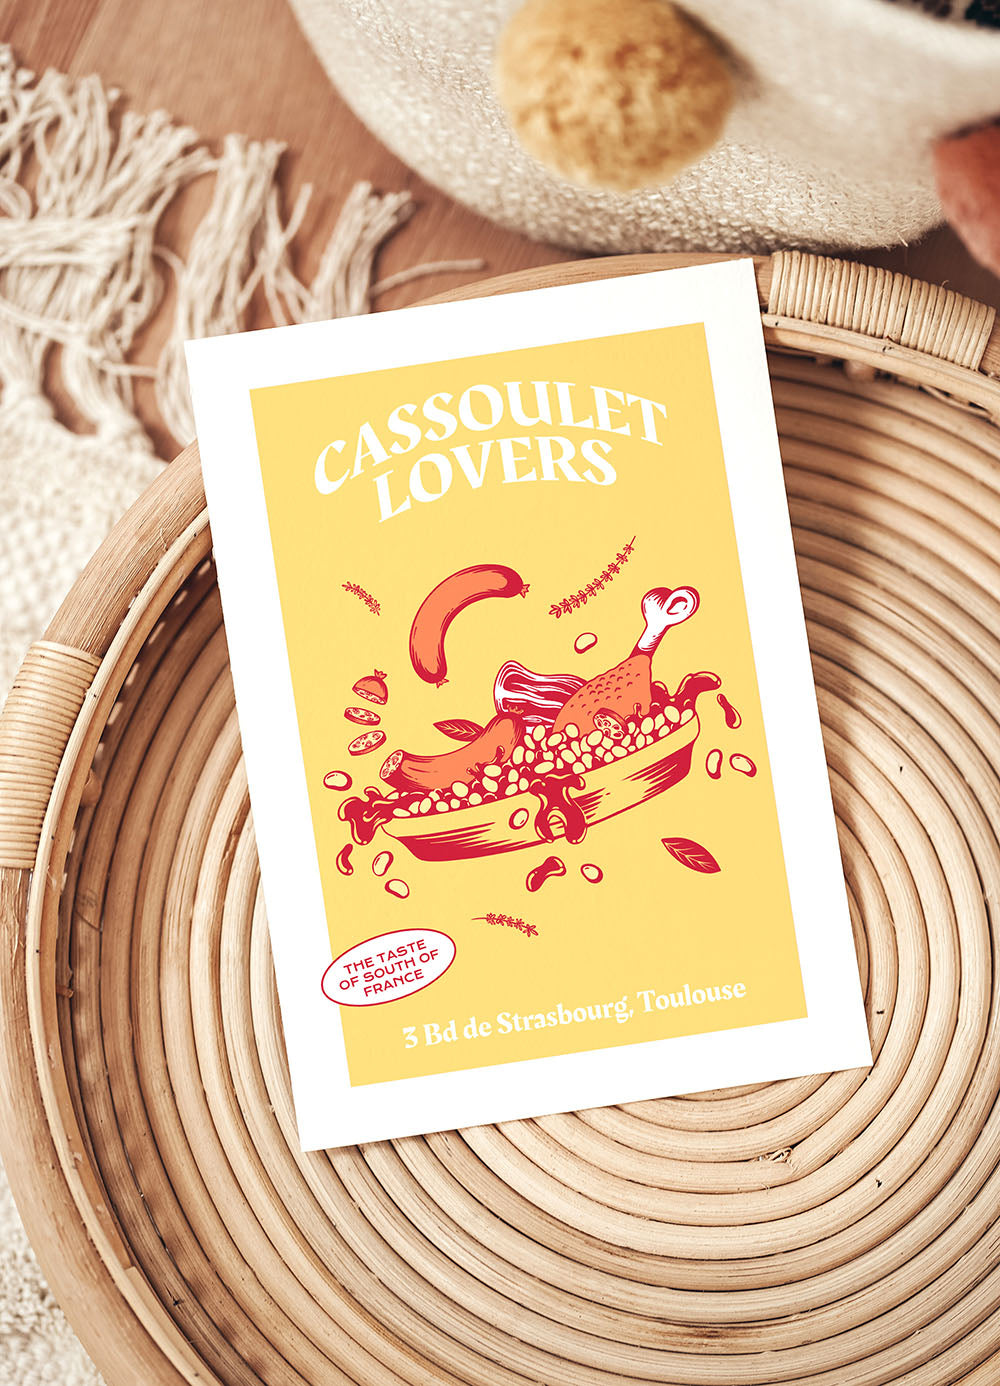 Affiche Cassoulet lovers